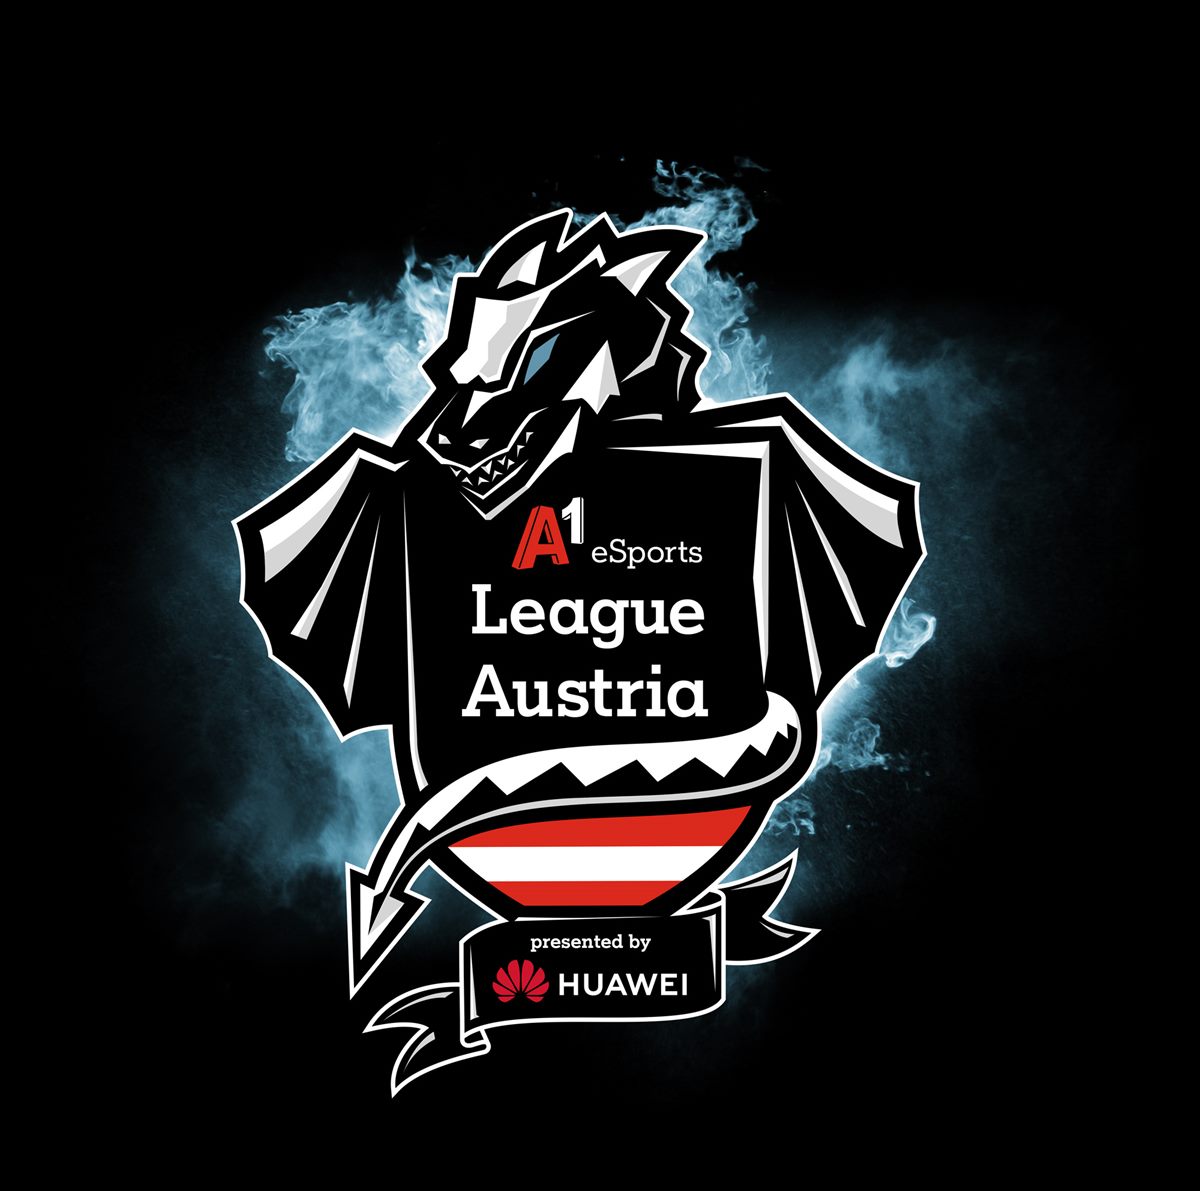 Kick-Off für die 2. Season der A1 eSports League Austria